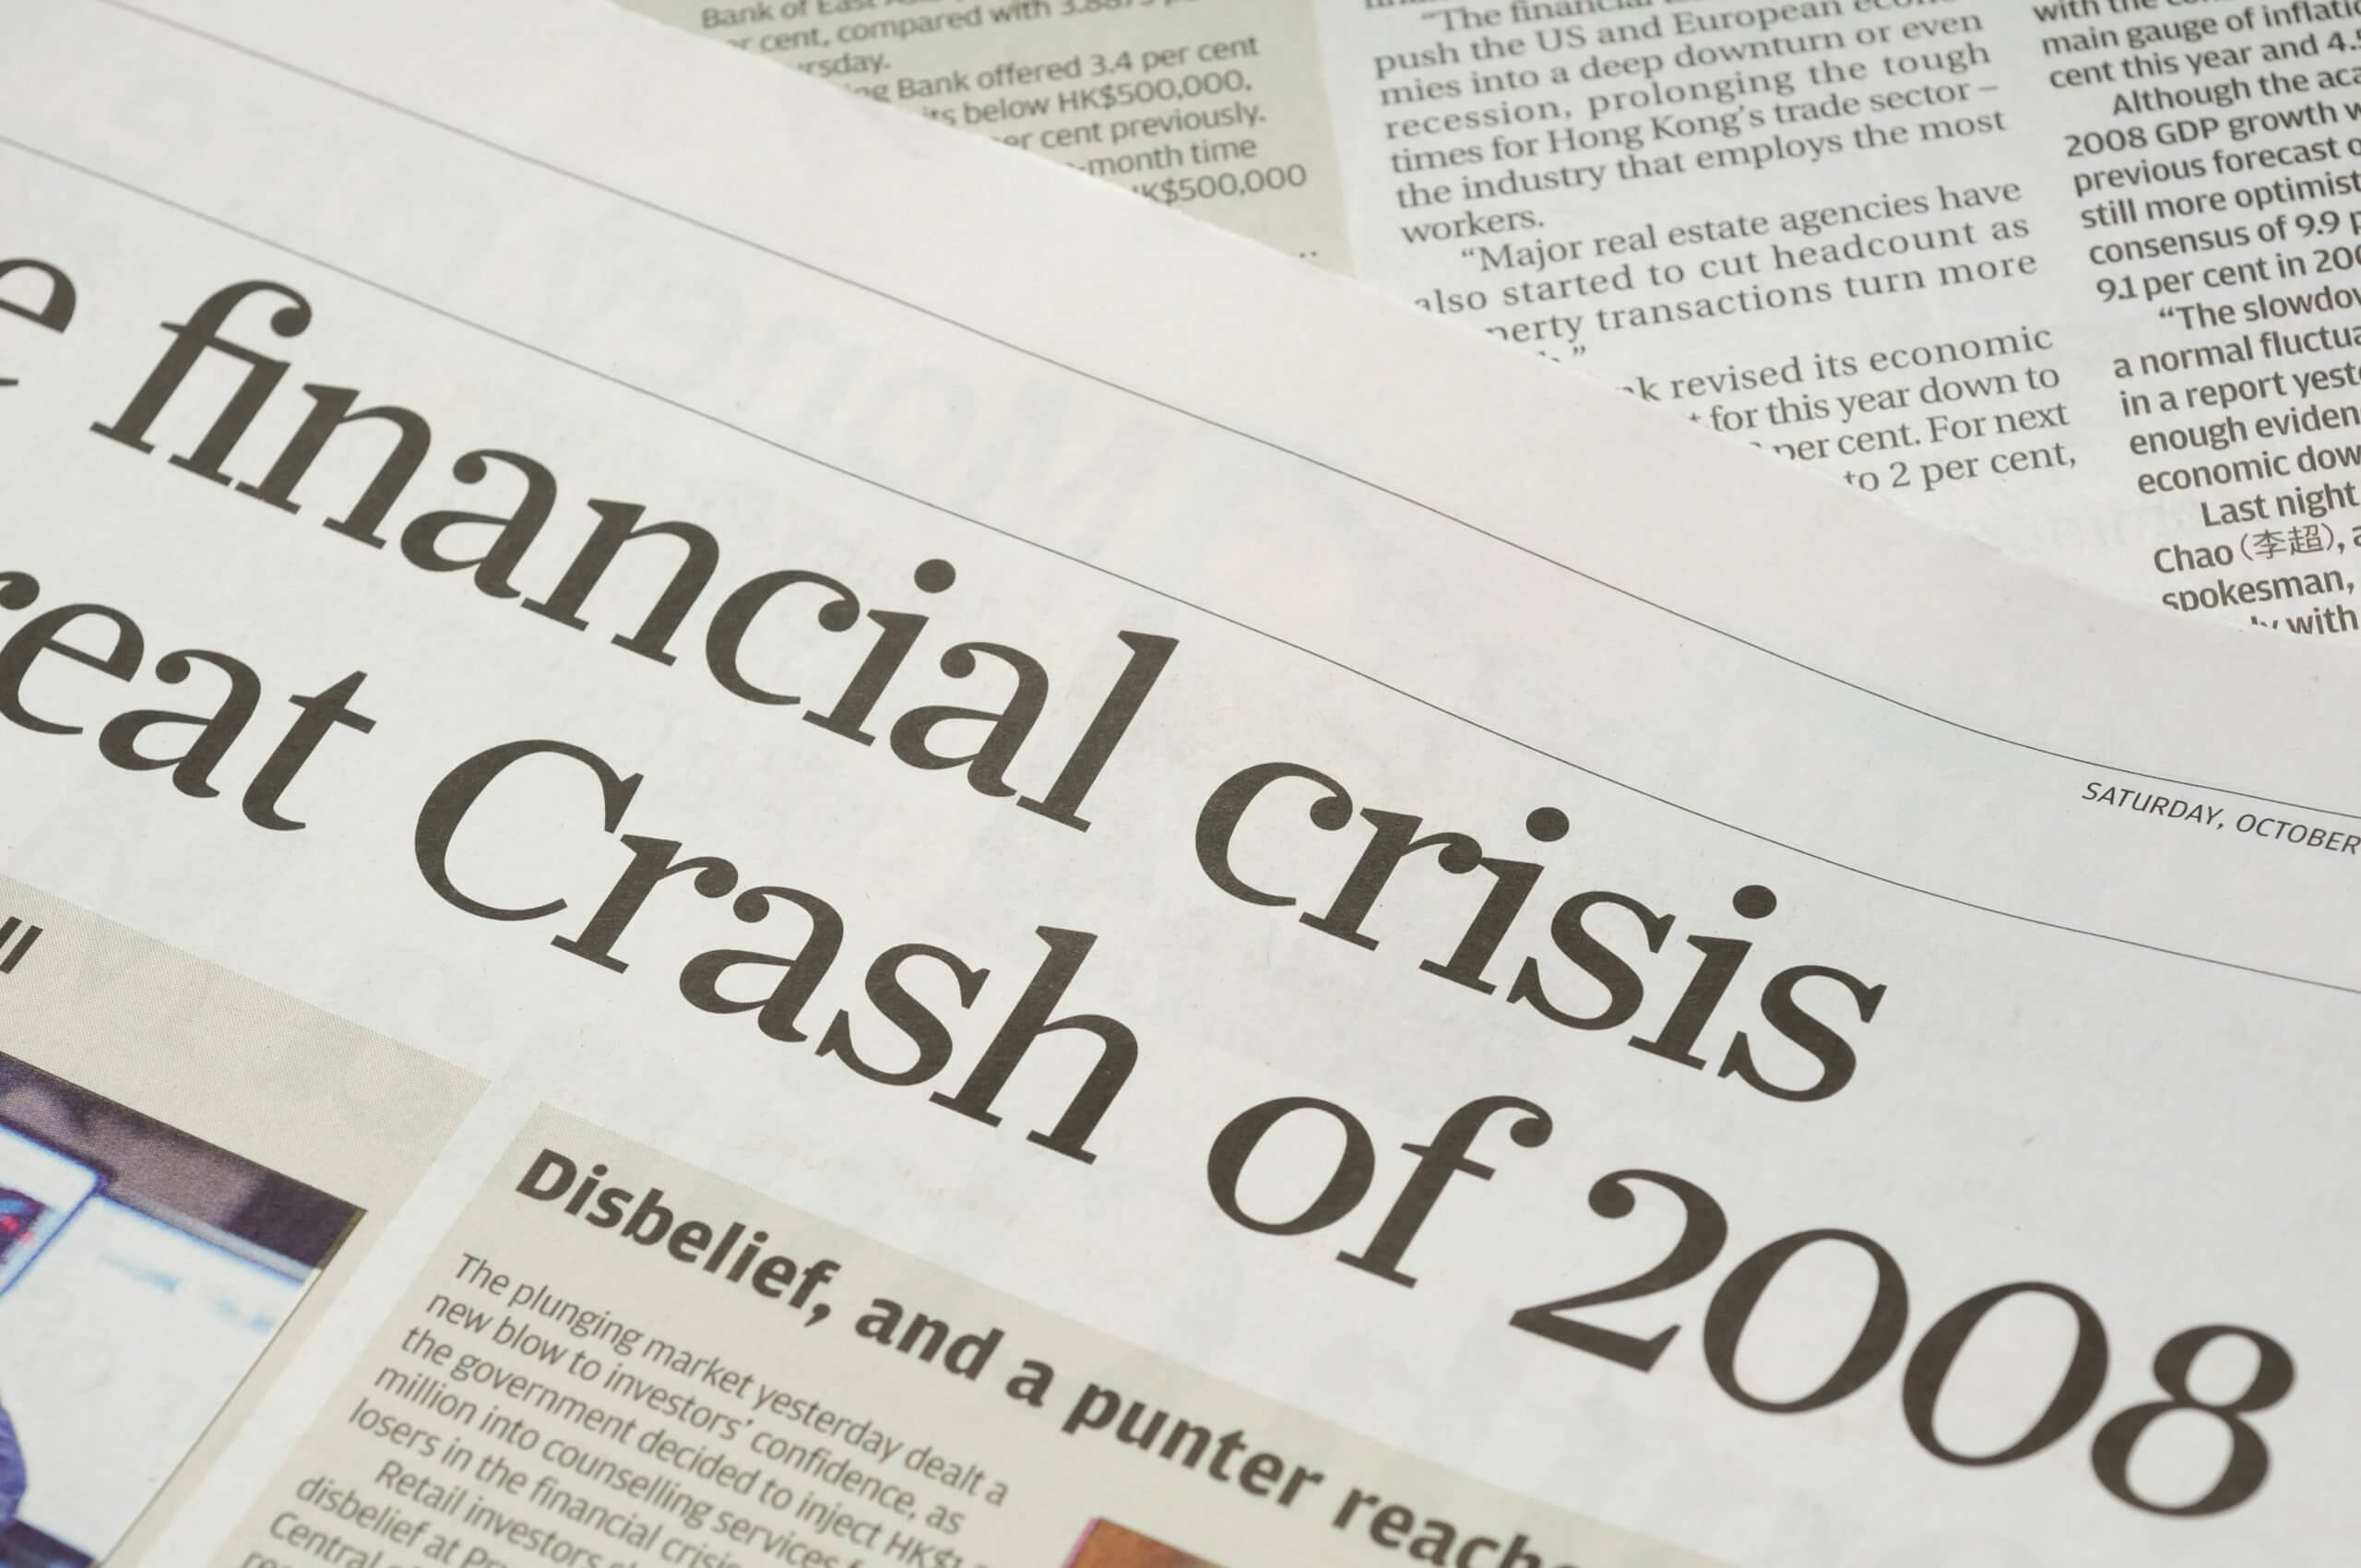 Newspaper headlines - finanical crisis on 2008